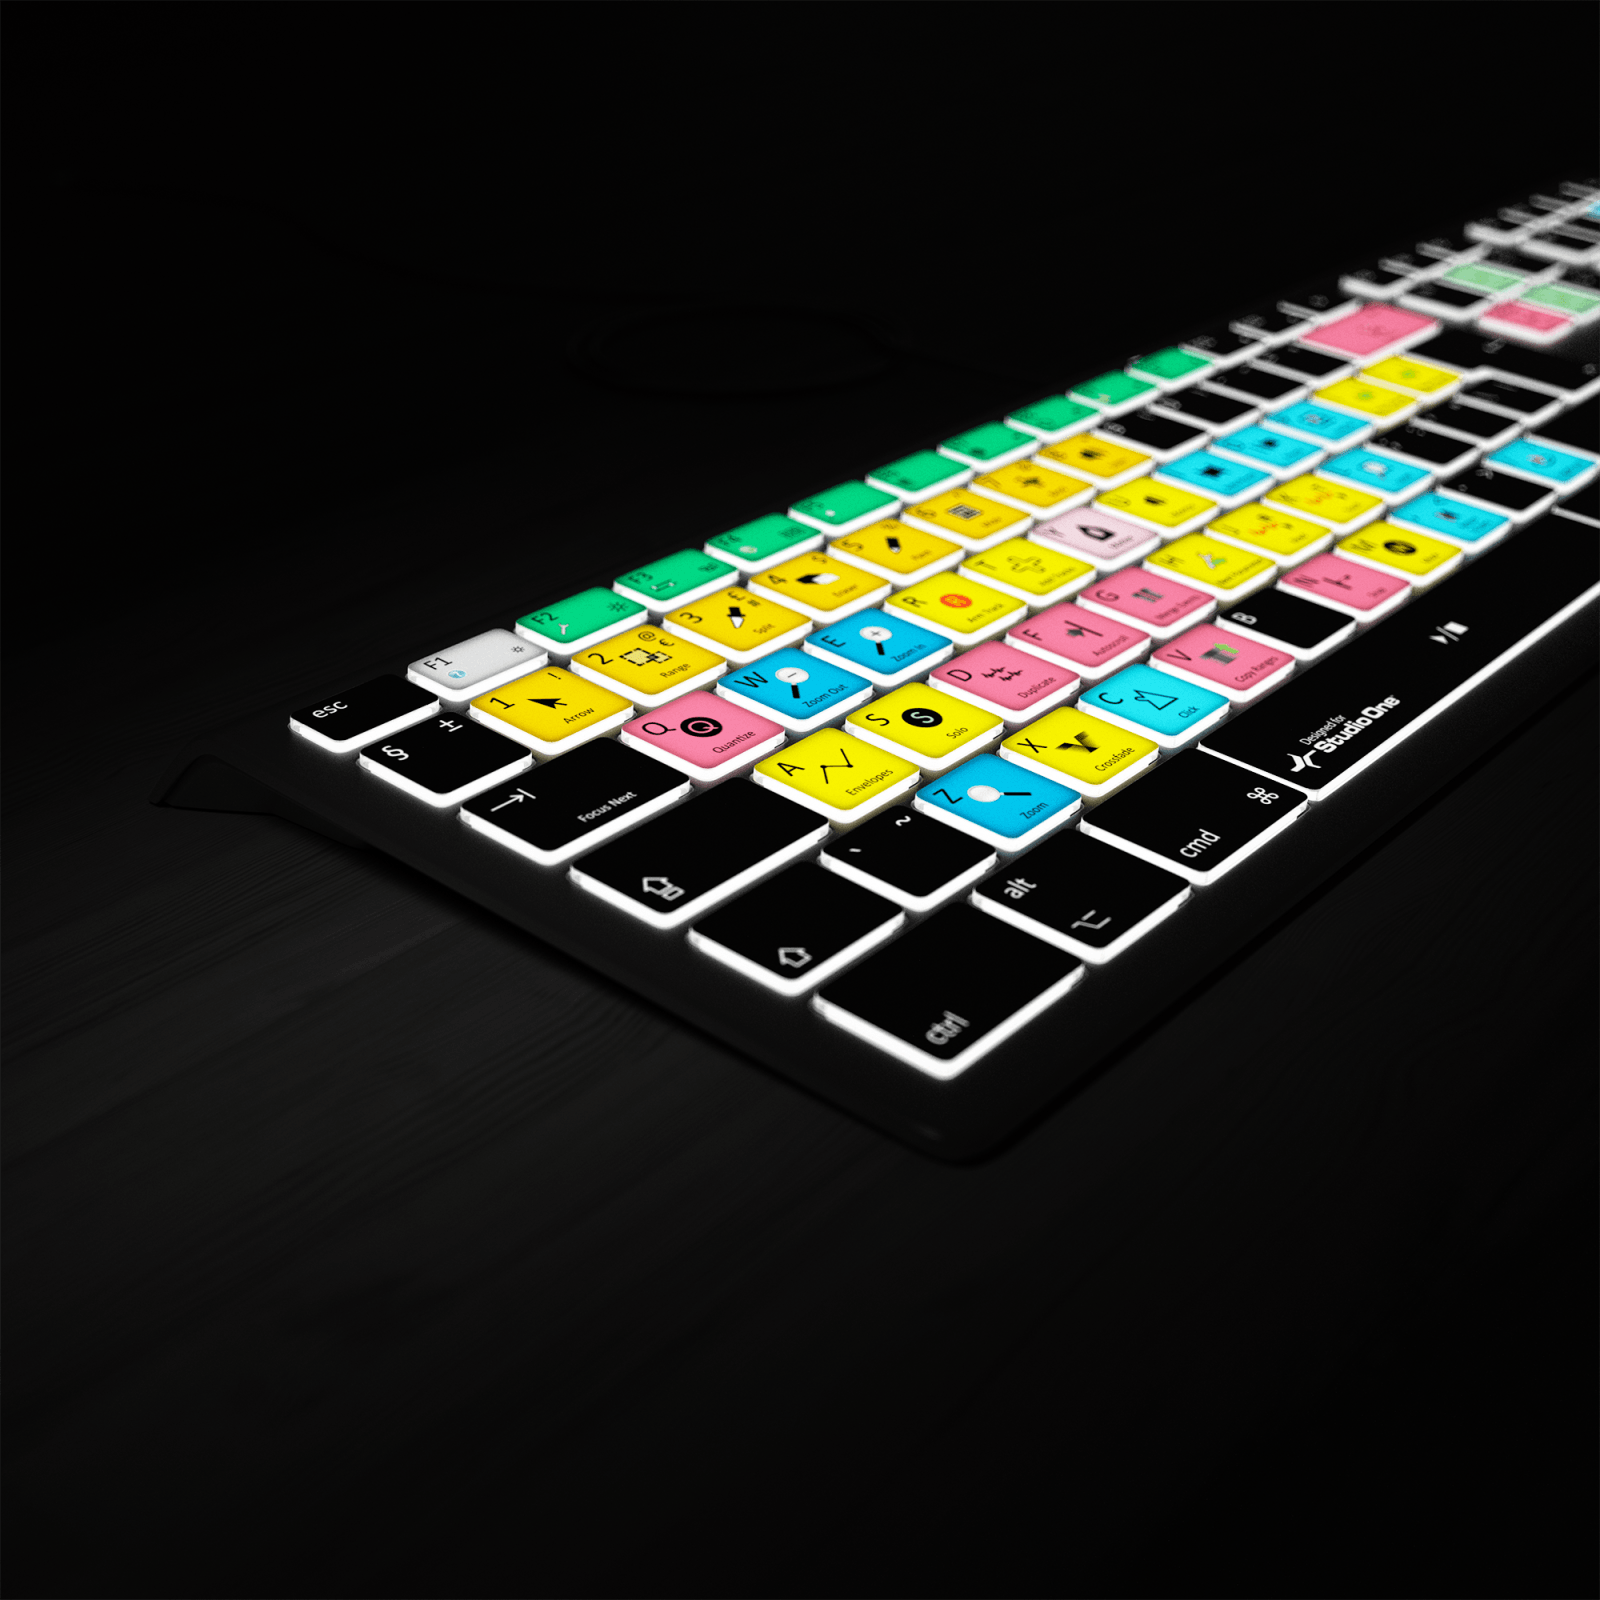 Backlit Presonus Studio One keyboard with backlights on